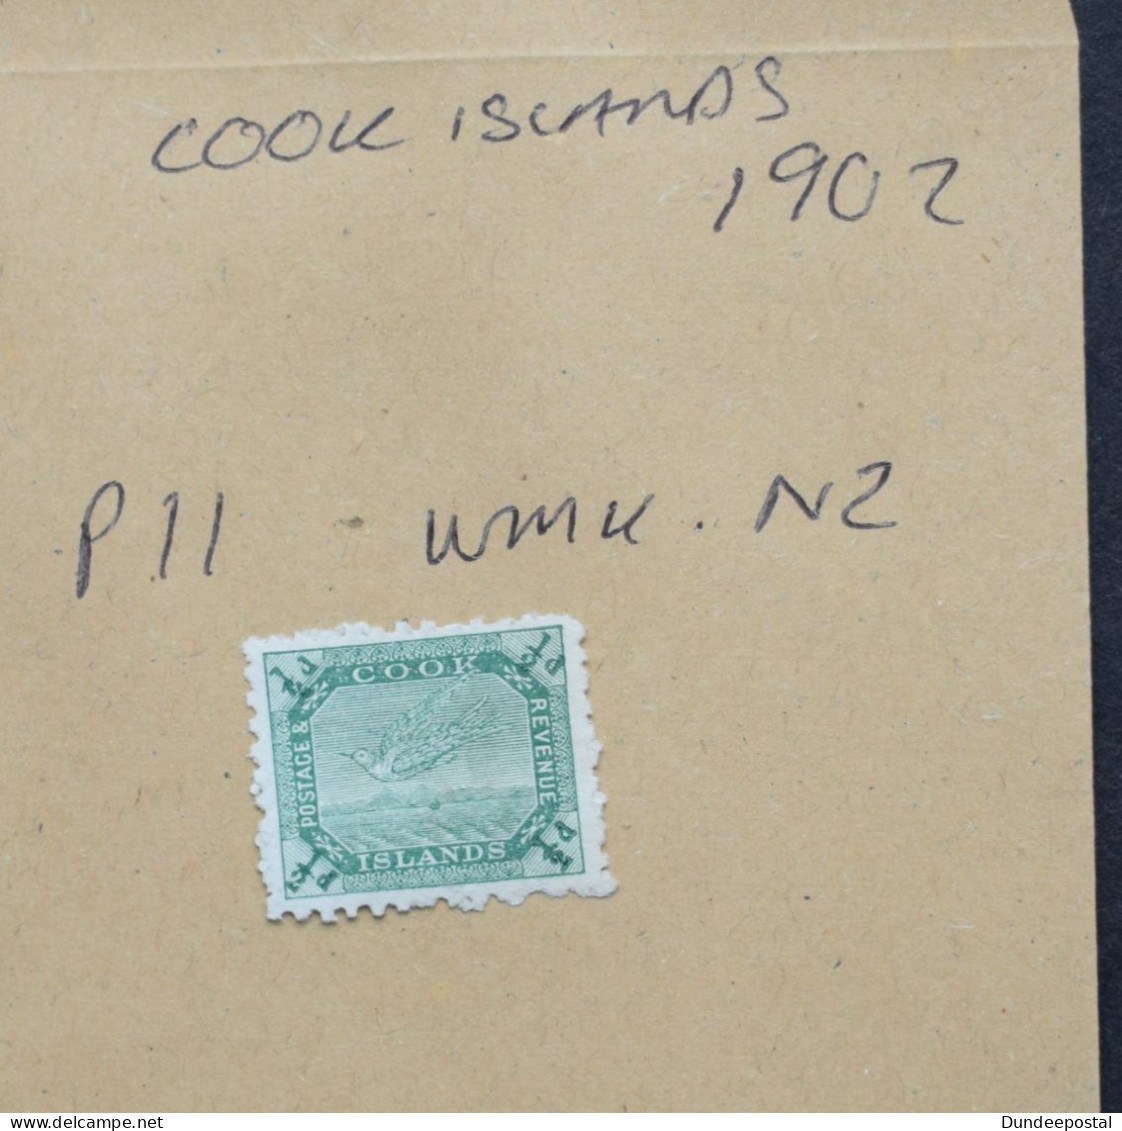 COOK ISLANDS  STAMPS P11 Wmk N2 1902   ~~L@@K~~ - Kokosinseln (Keeling Islands)